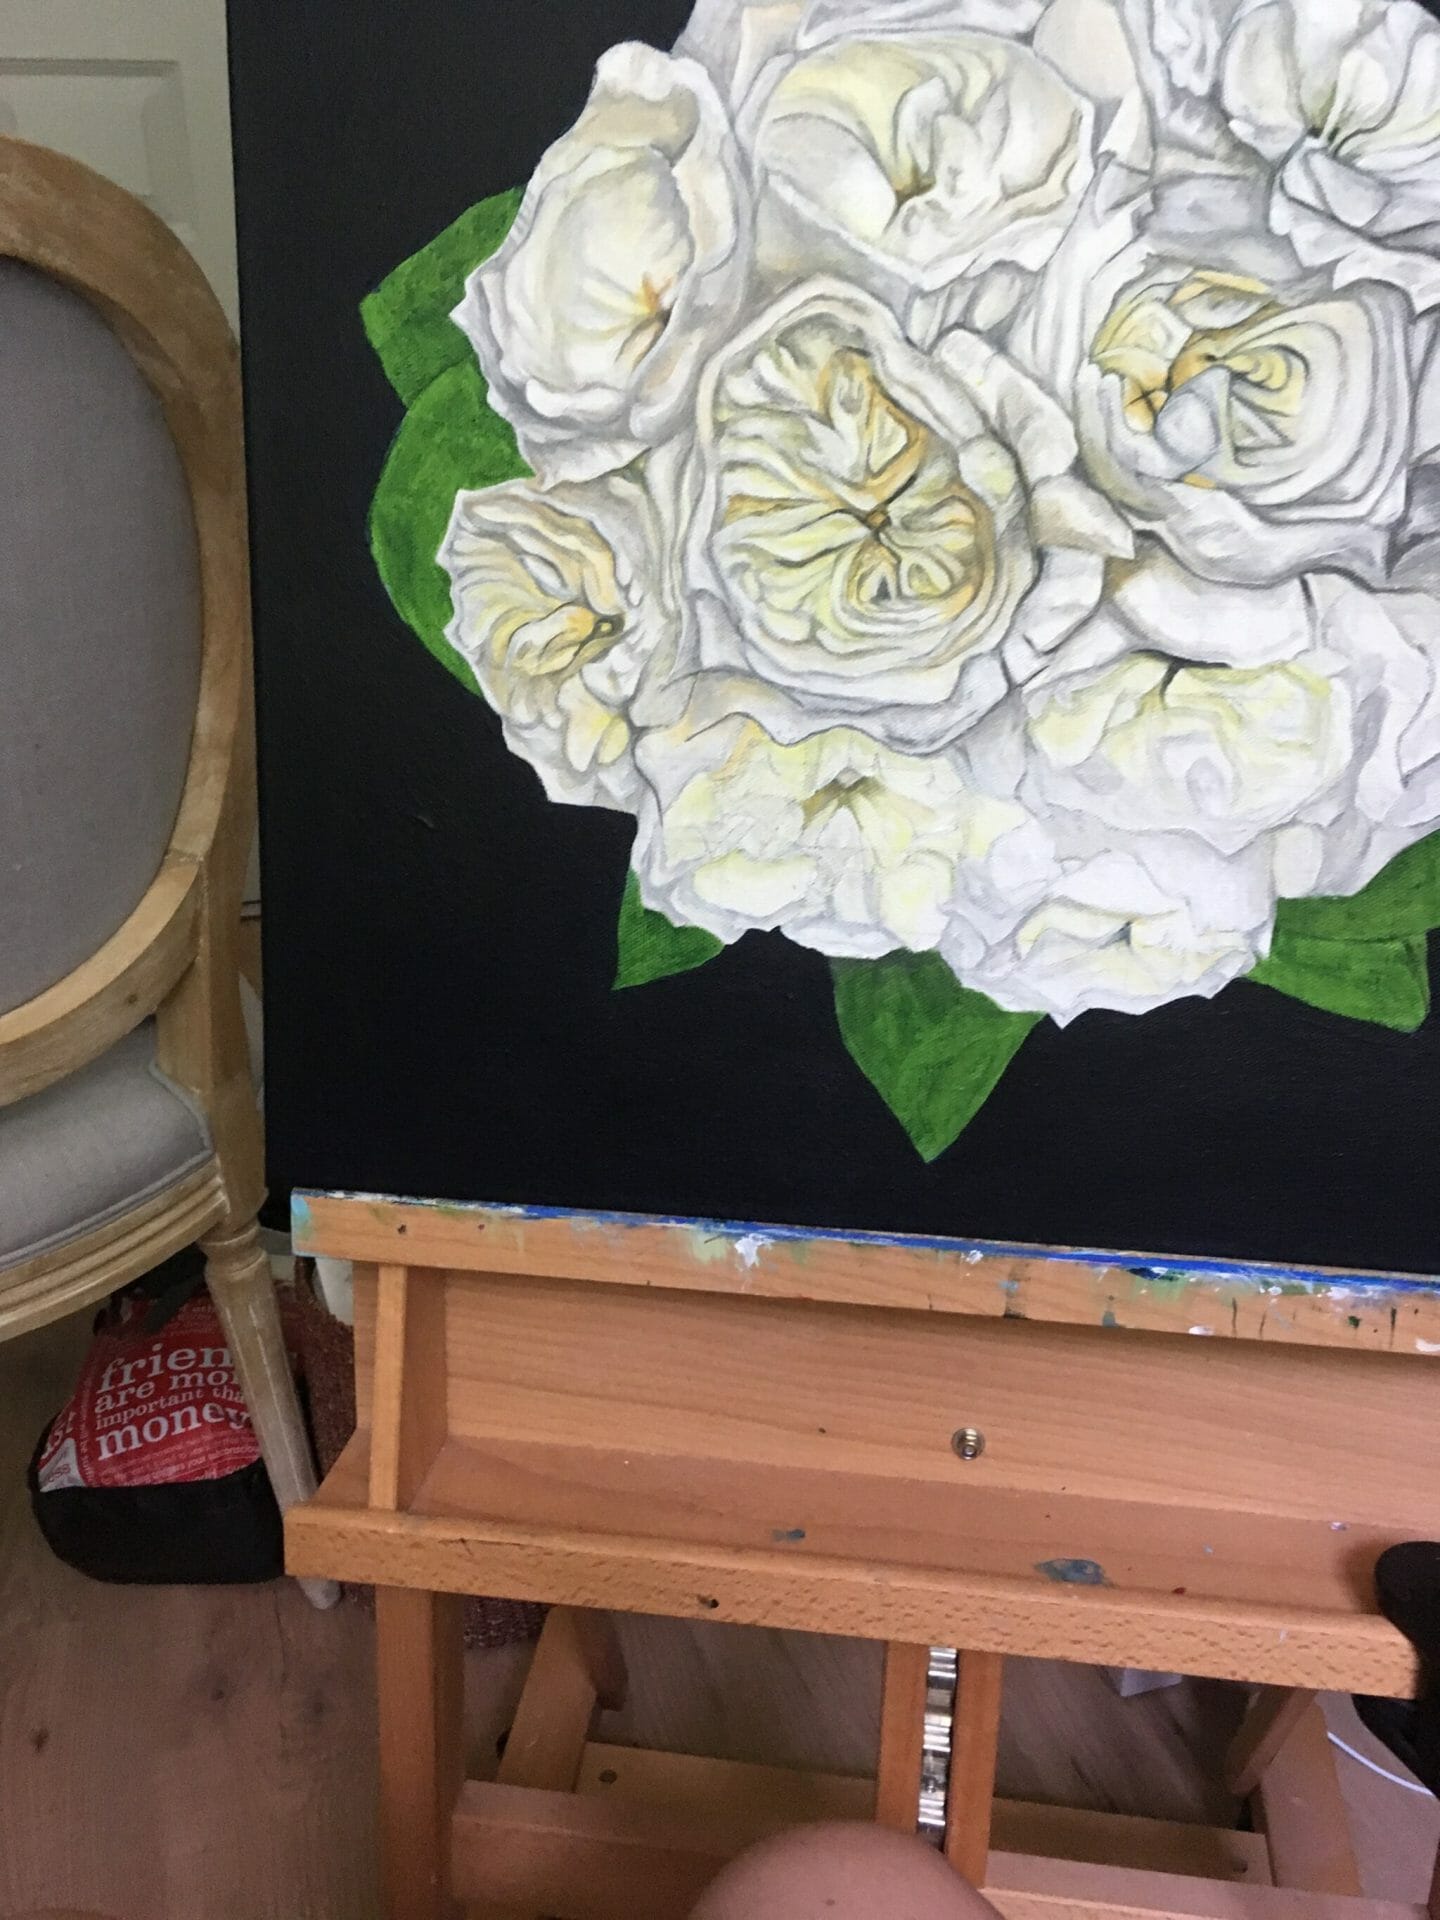 work in progress of an original bridal bouquet painting by Erica Eriksdotter